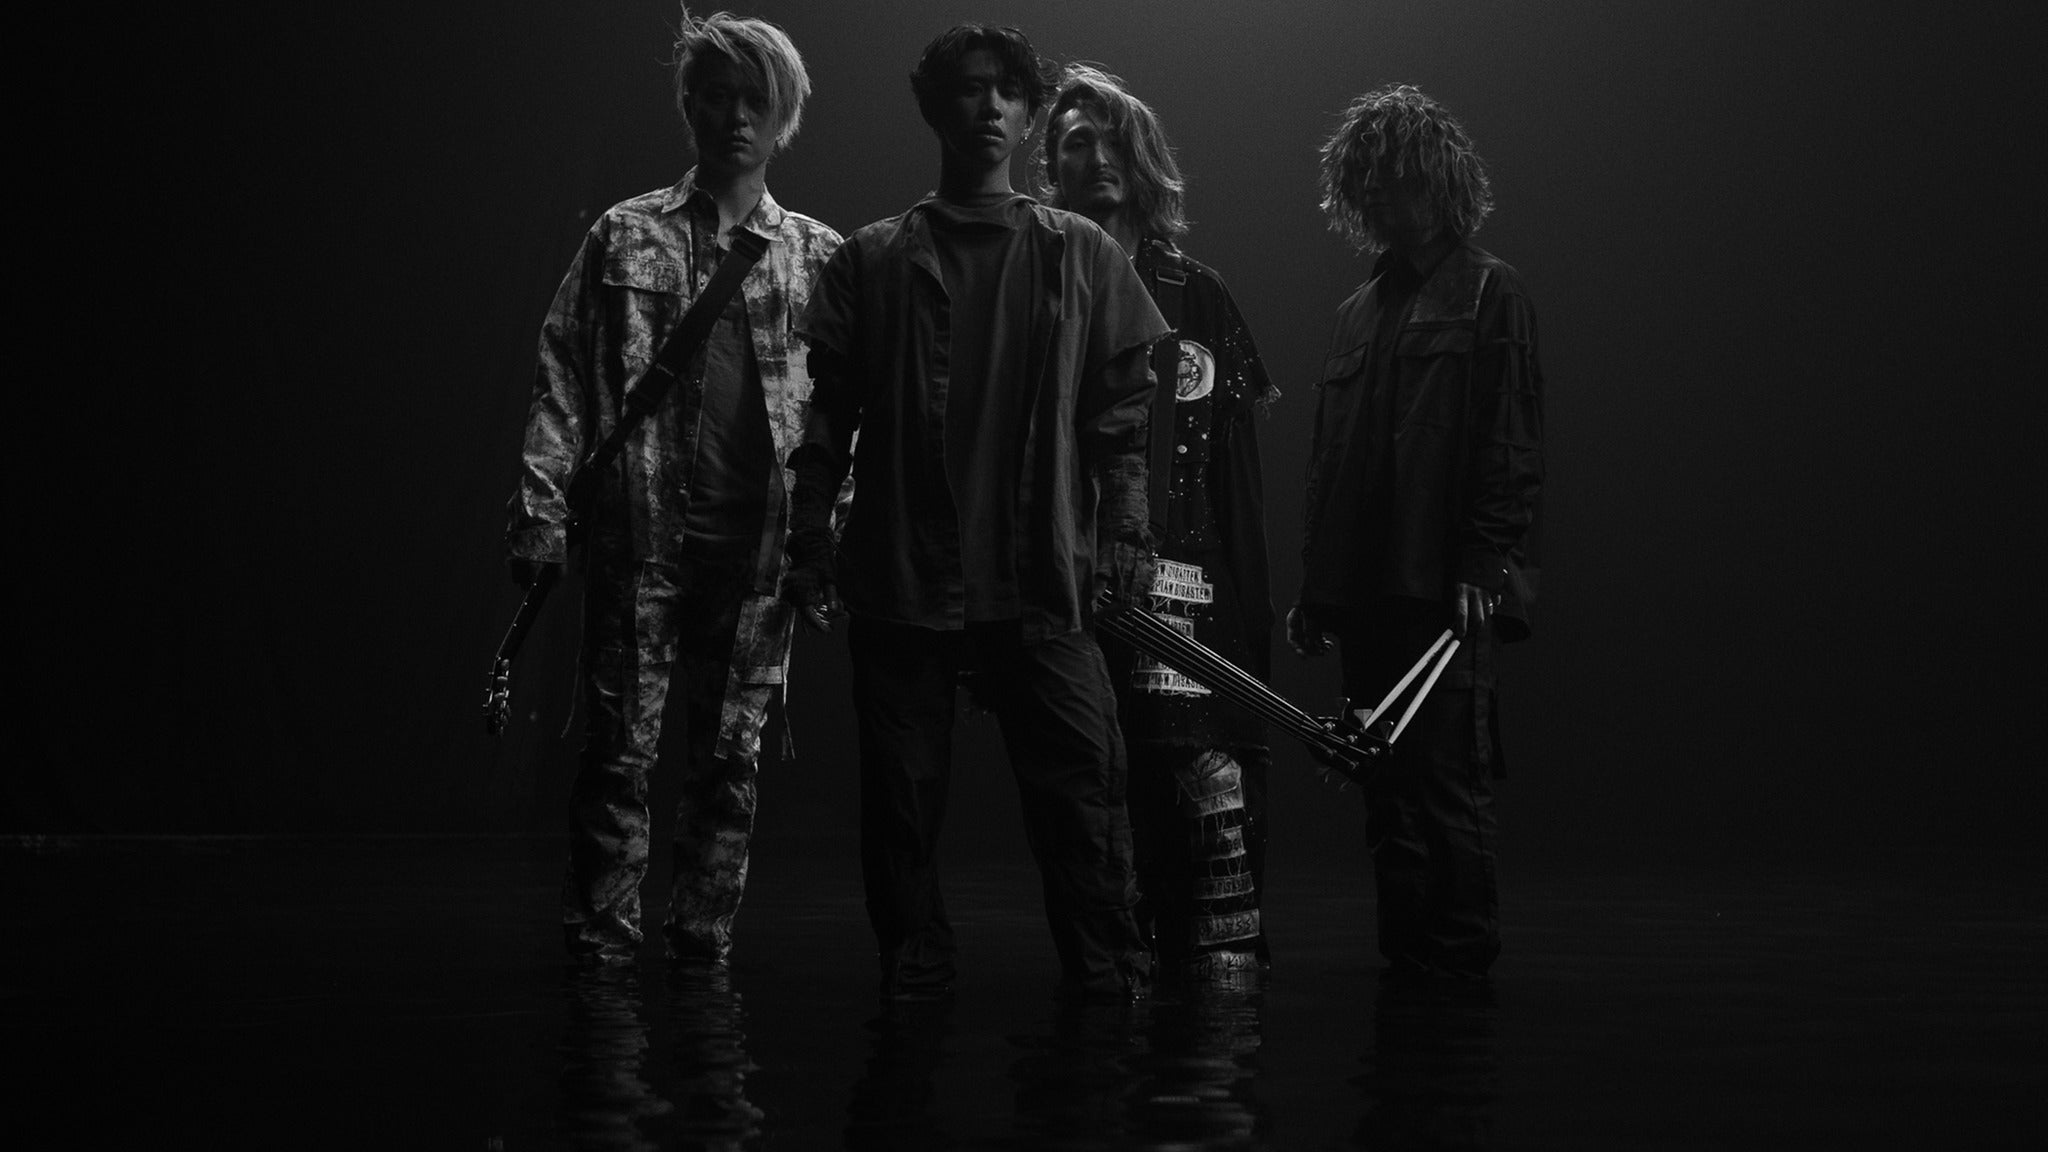 ONE OK ROCK in Philadelphia promo photo for Exclusive presale offer code